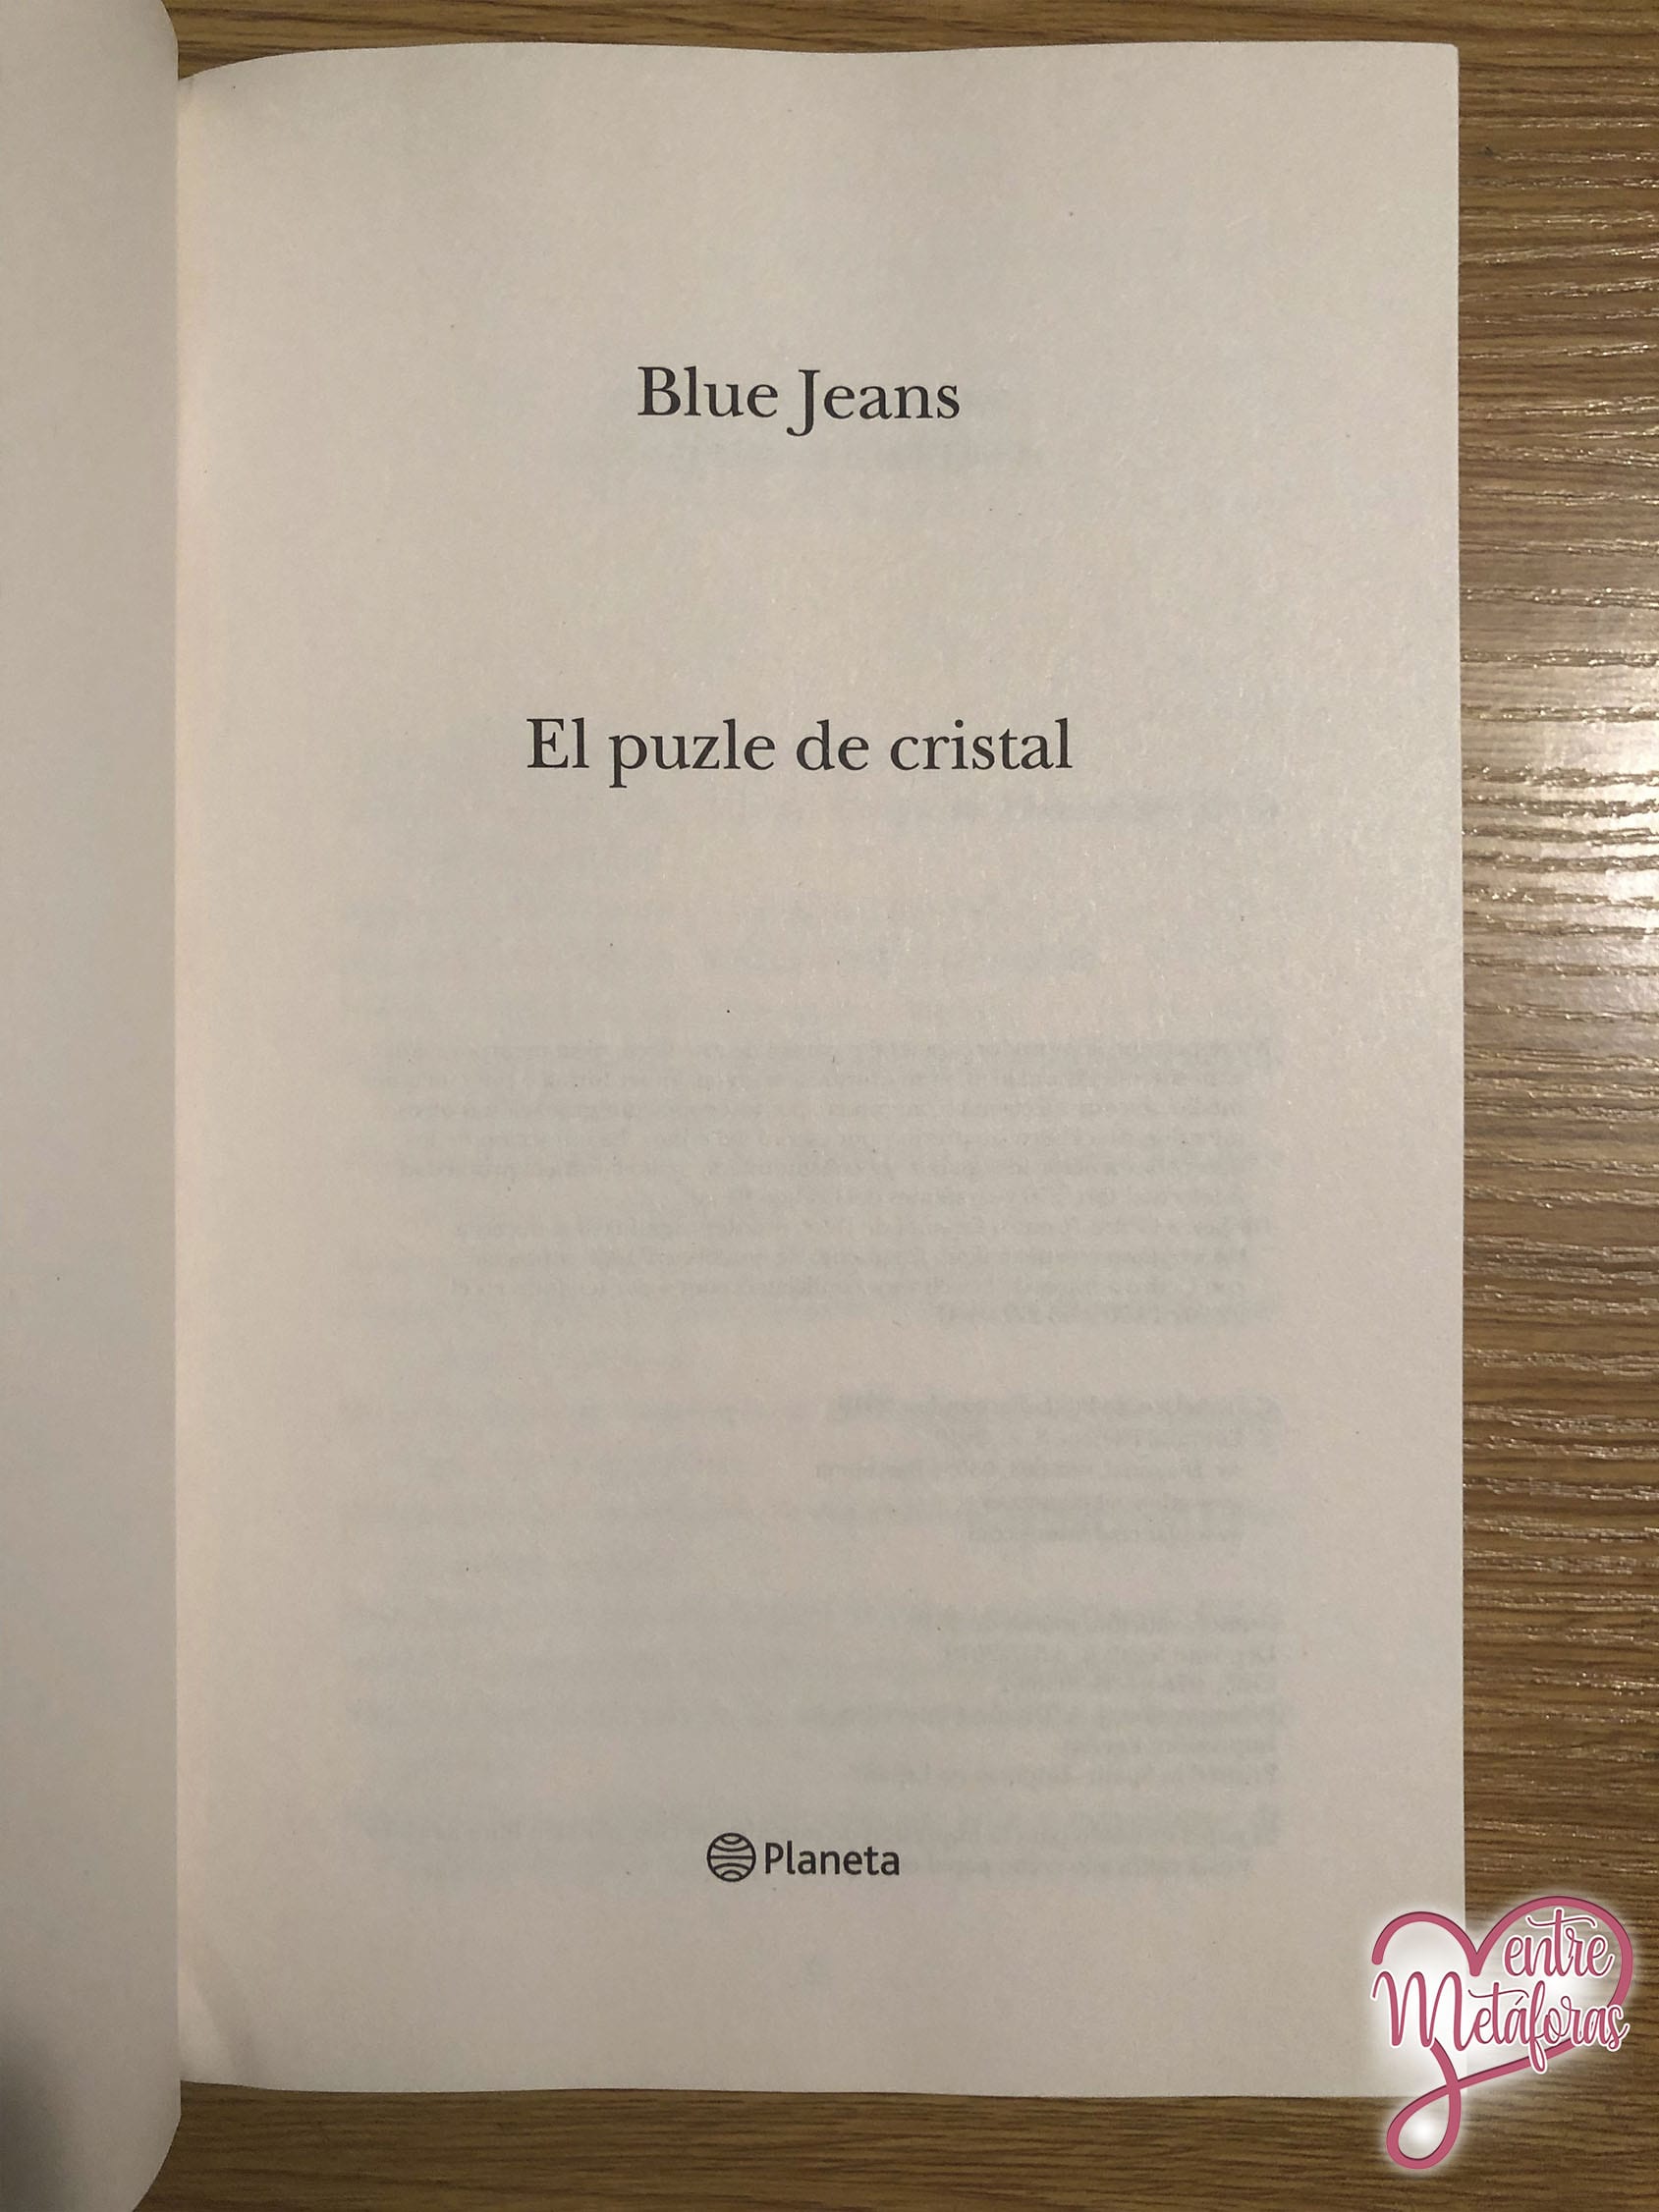 El puzle de cristal, de Blue Jeans - Reseña